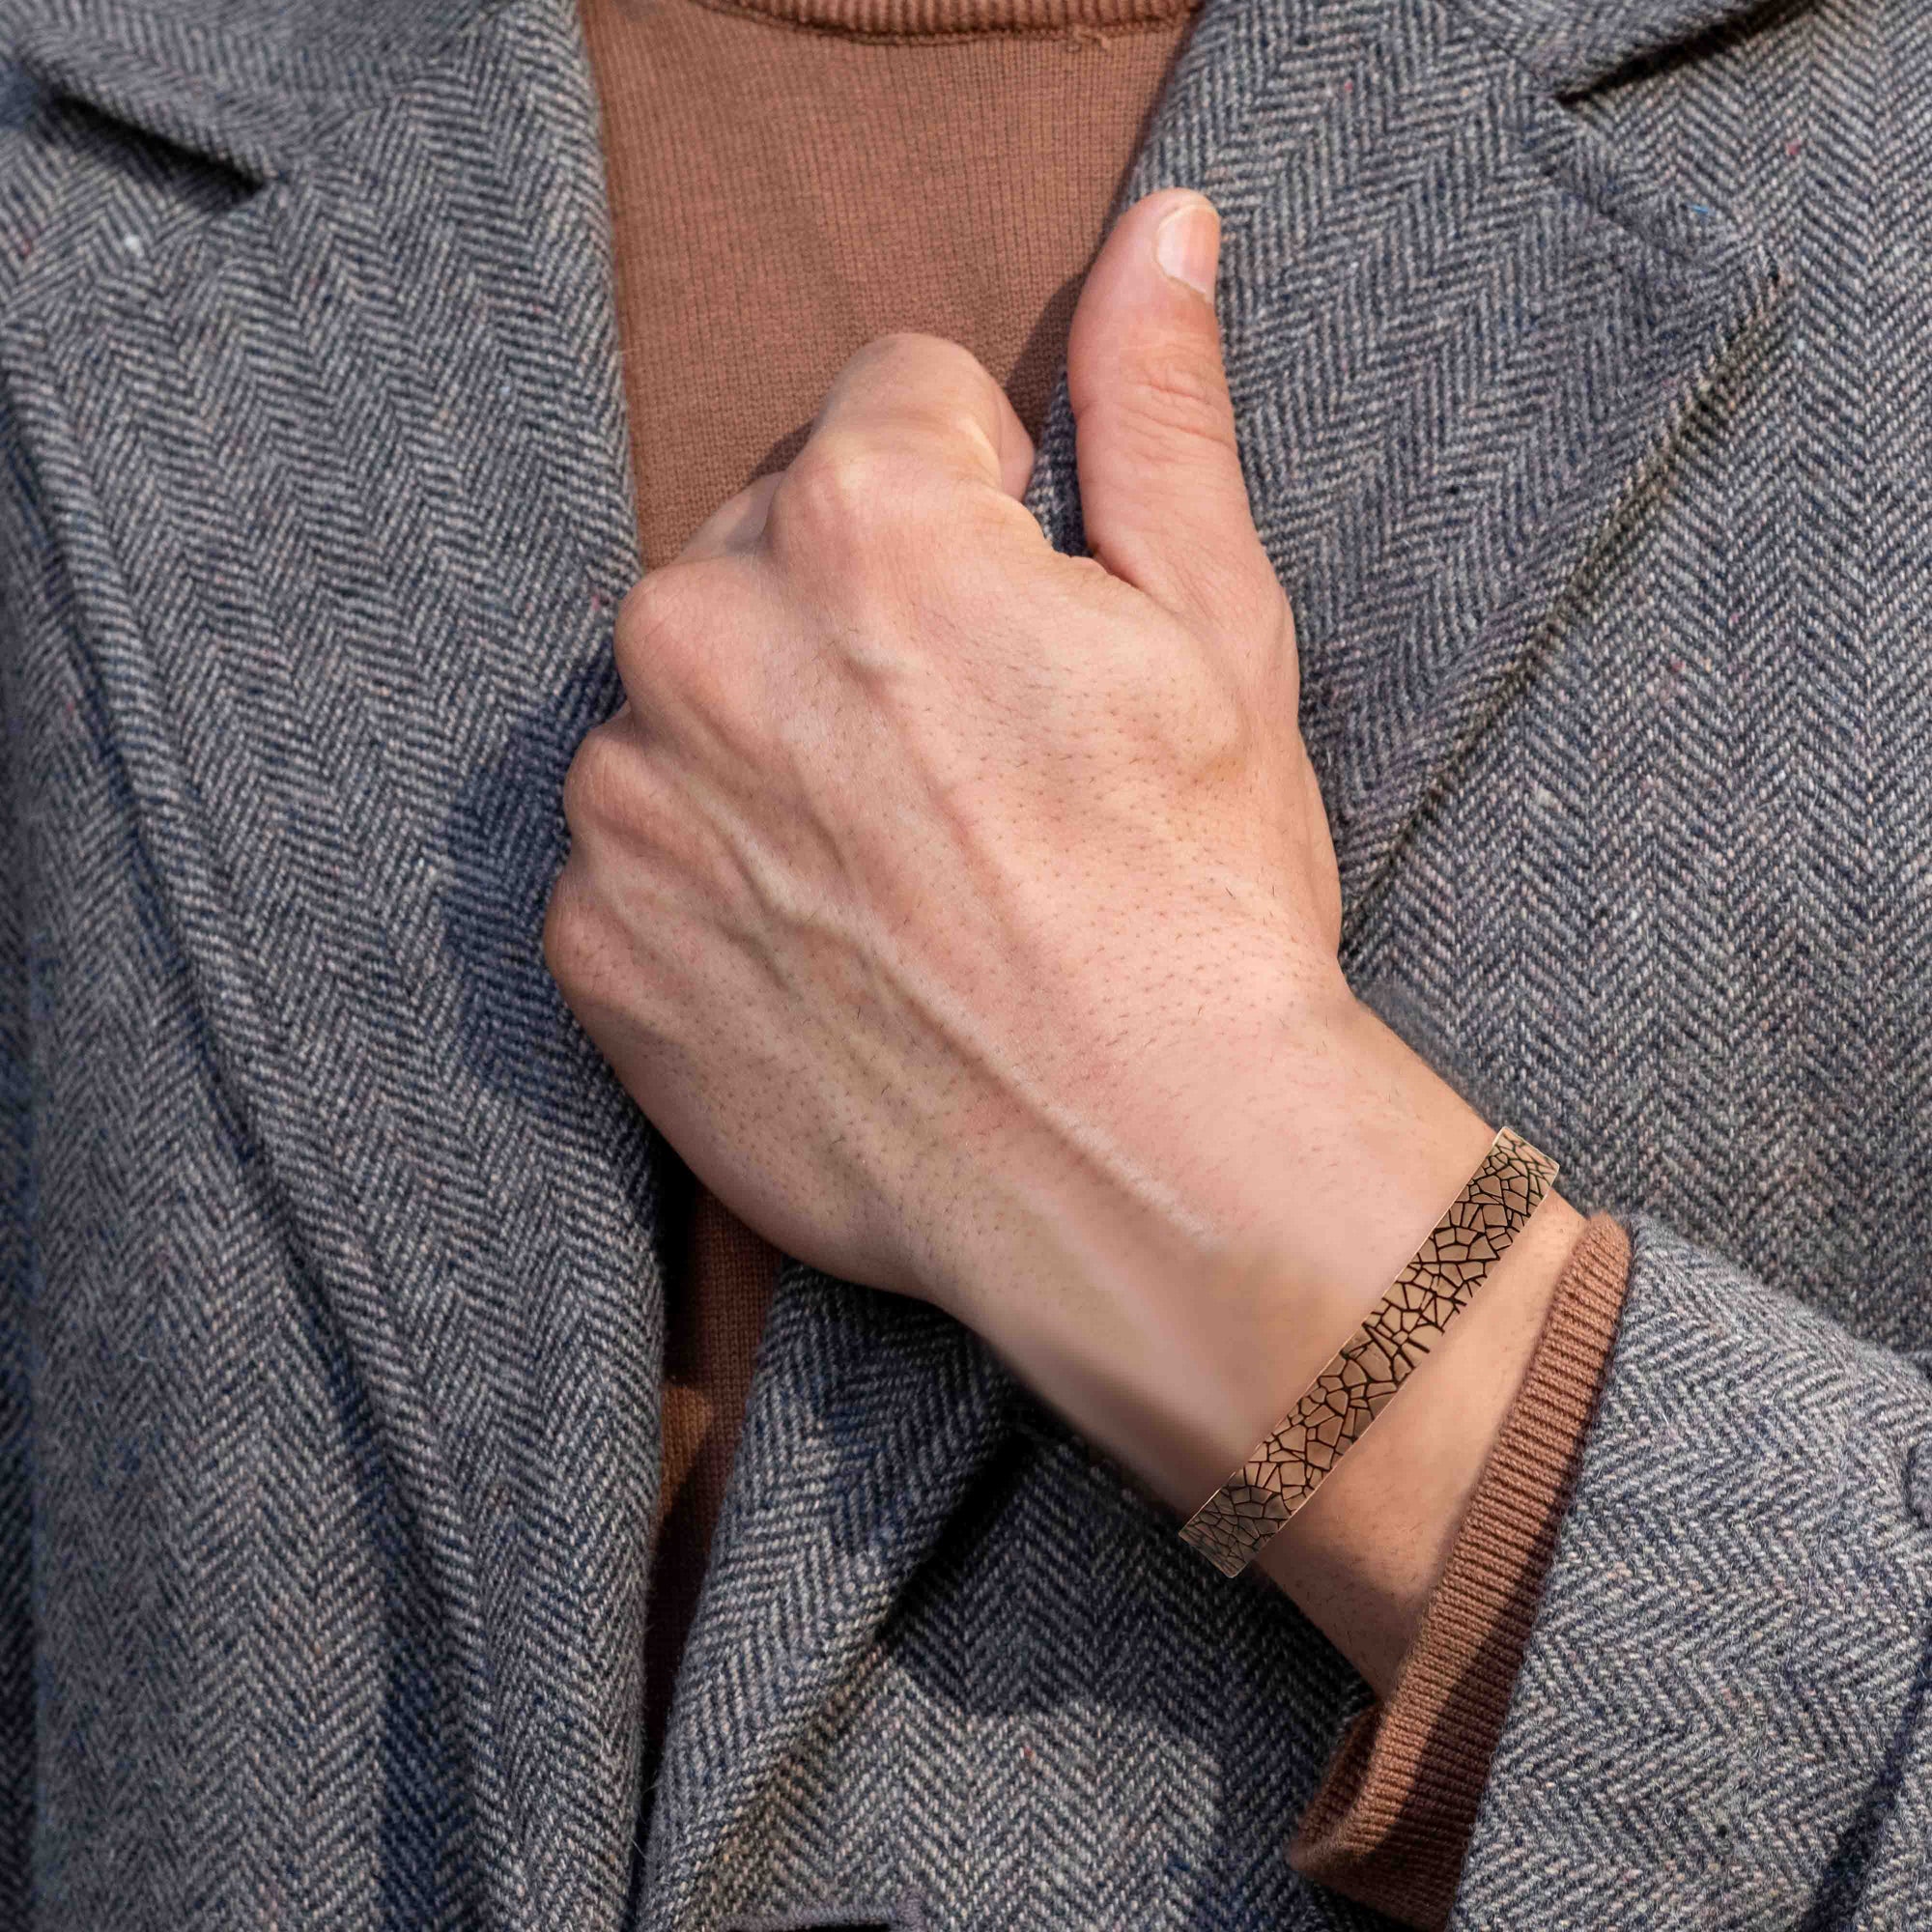 10mm Wide Men's Embossed Mosaic Solid Copper Cuff on Male Model's Wrist Wearing Gray Sportscoat